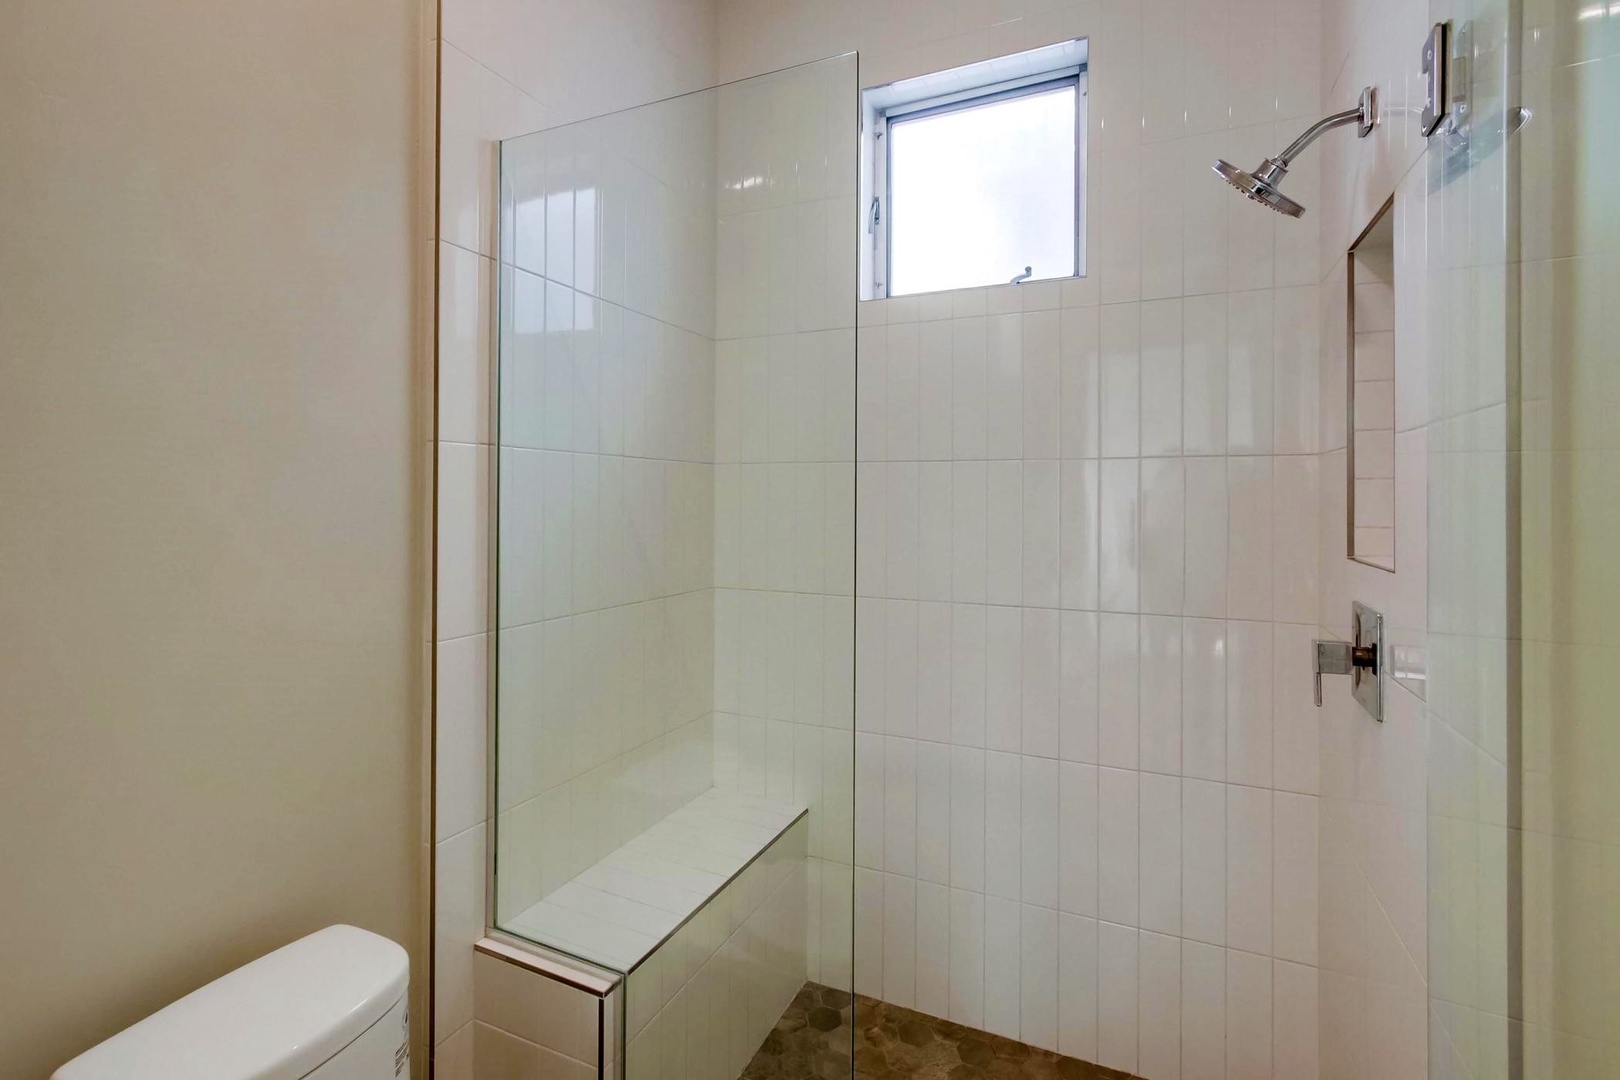 Hall bath with walk-in shower